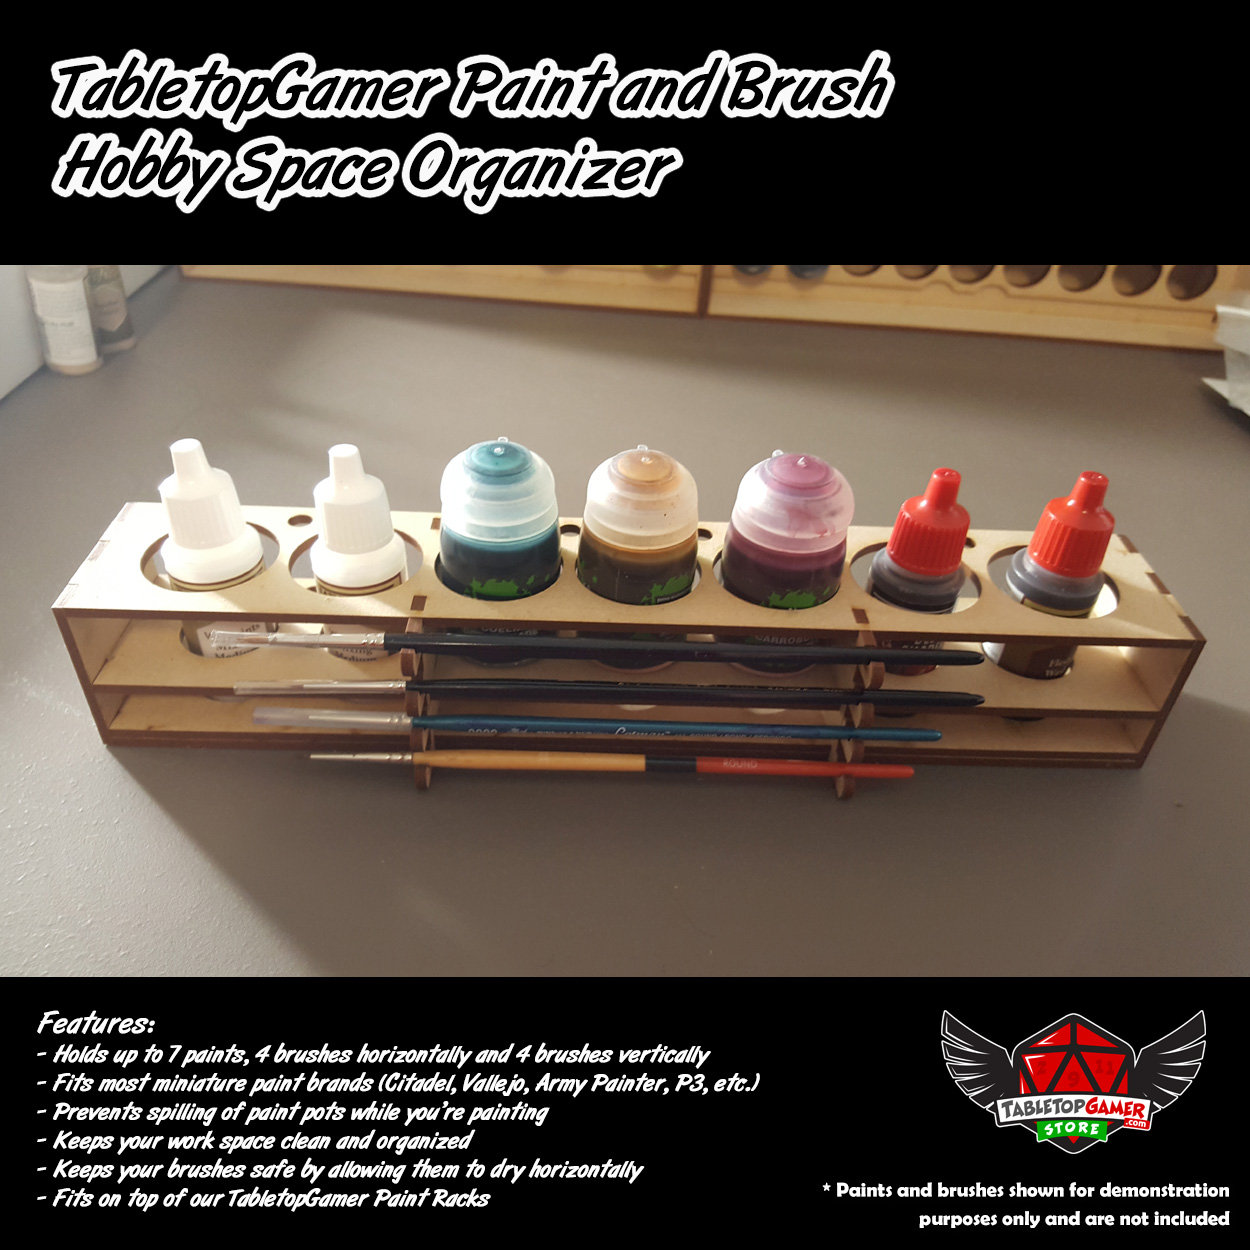 TTG Modular Miniature Storage Cabinet 